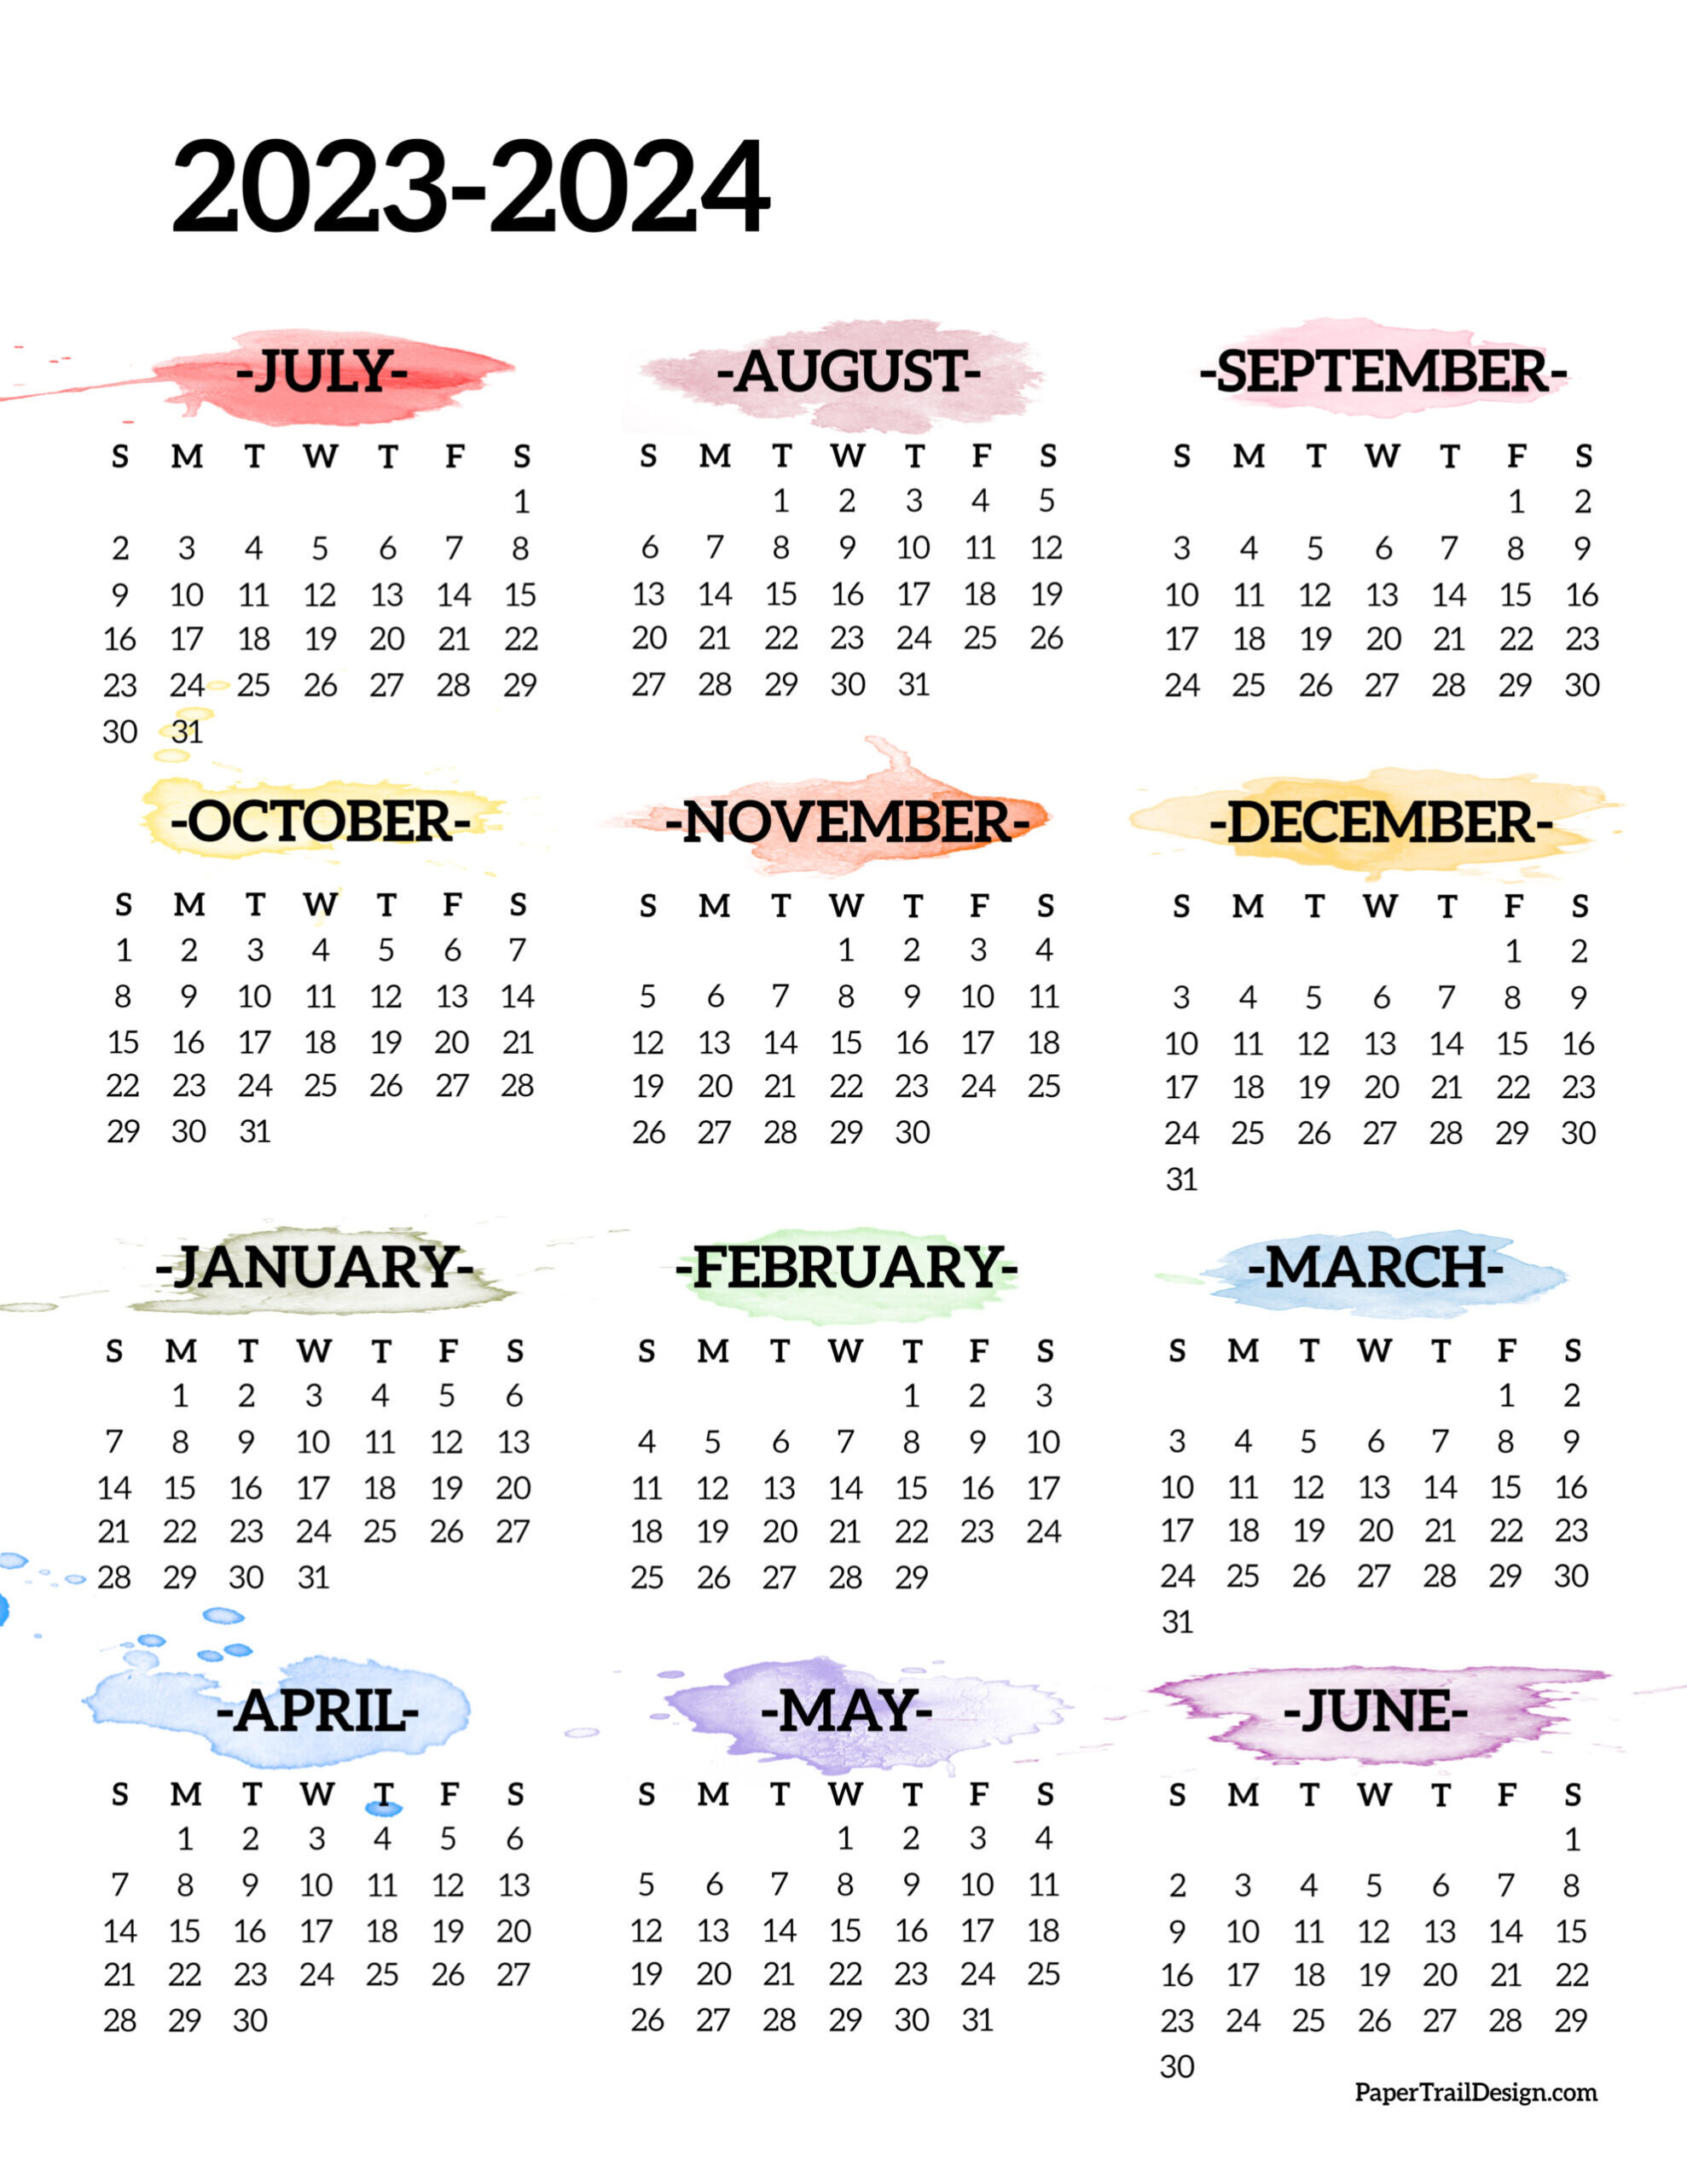 2023-2024 School Year Calendar Free Printable - Paper Trail Design regarding July 2023 To December 2024 Calendar